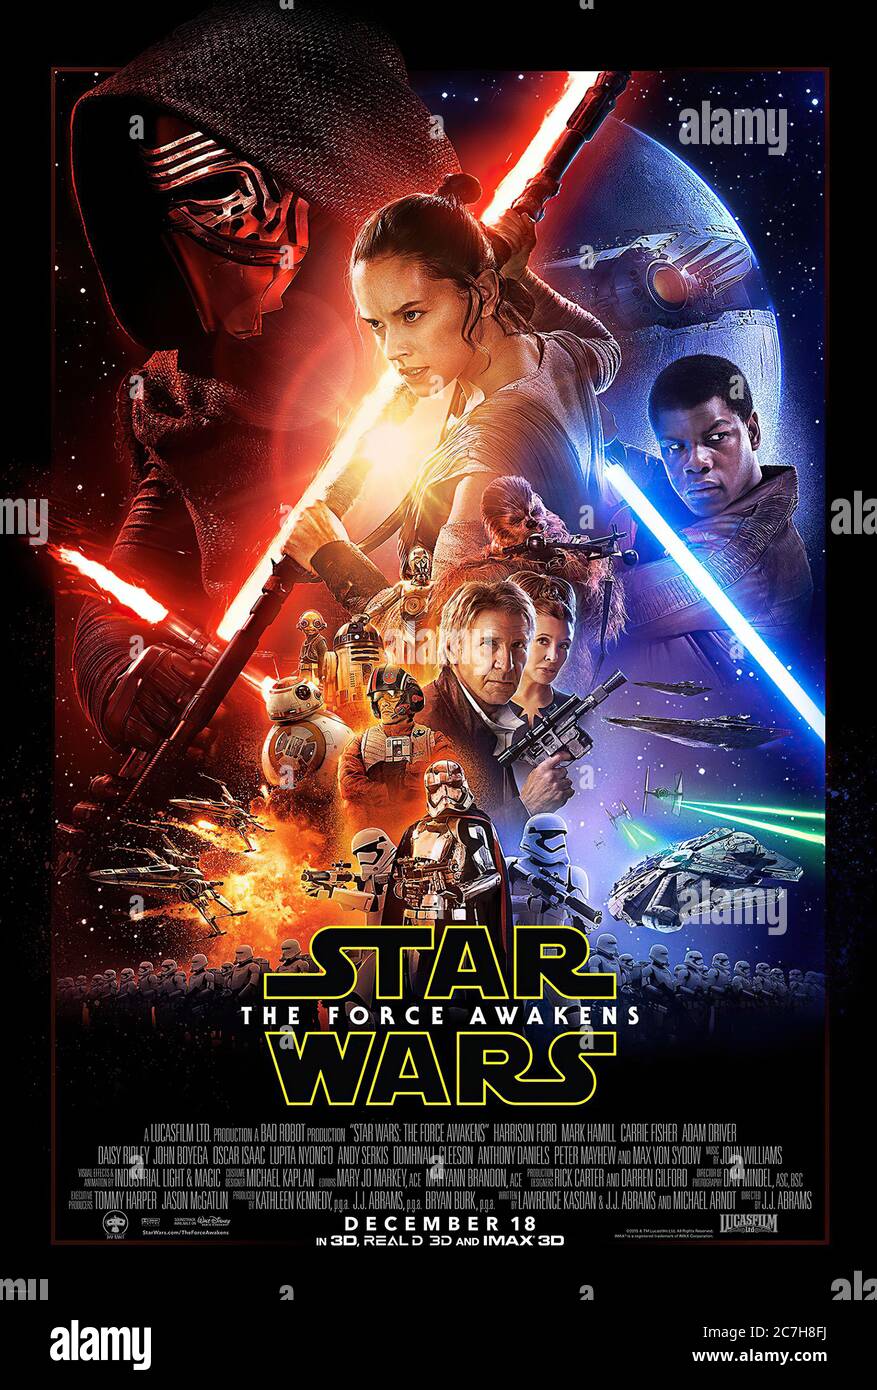 Star Wars episodio VII The Force Awakens - Poster di film Foto Stock